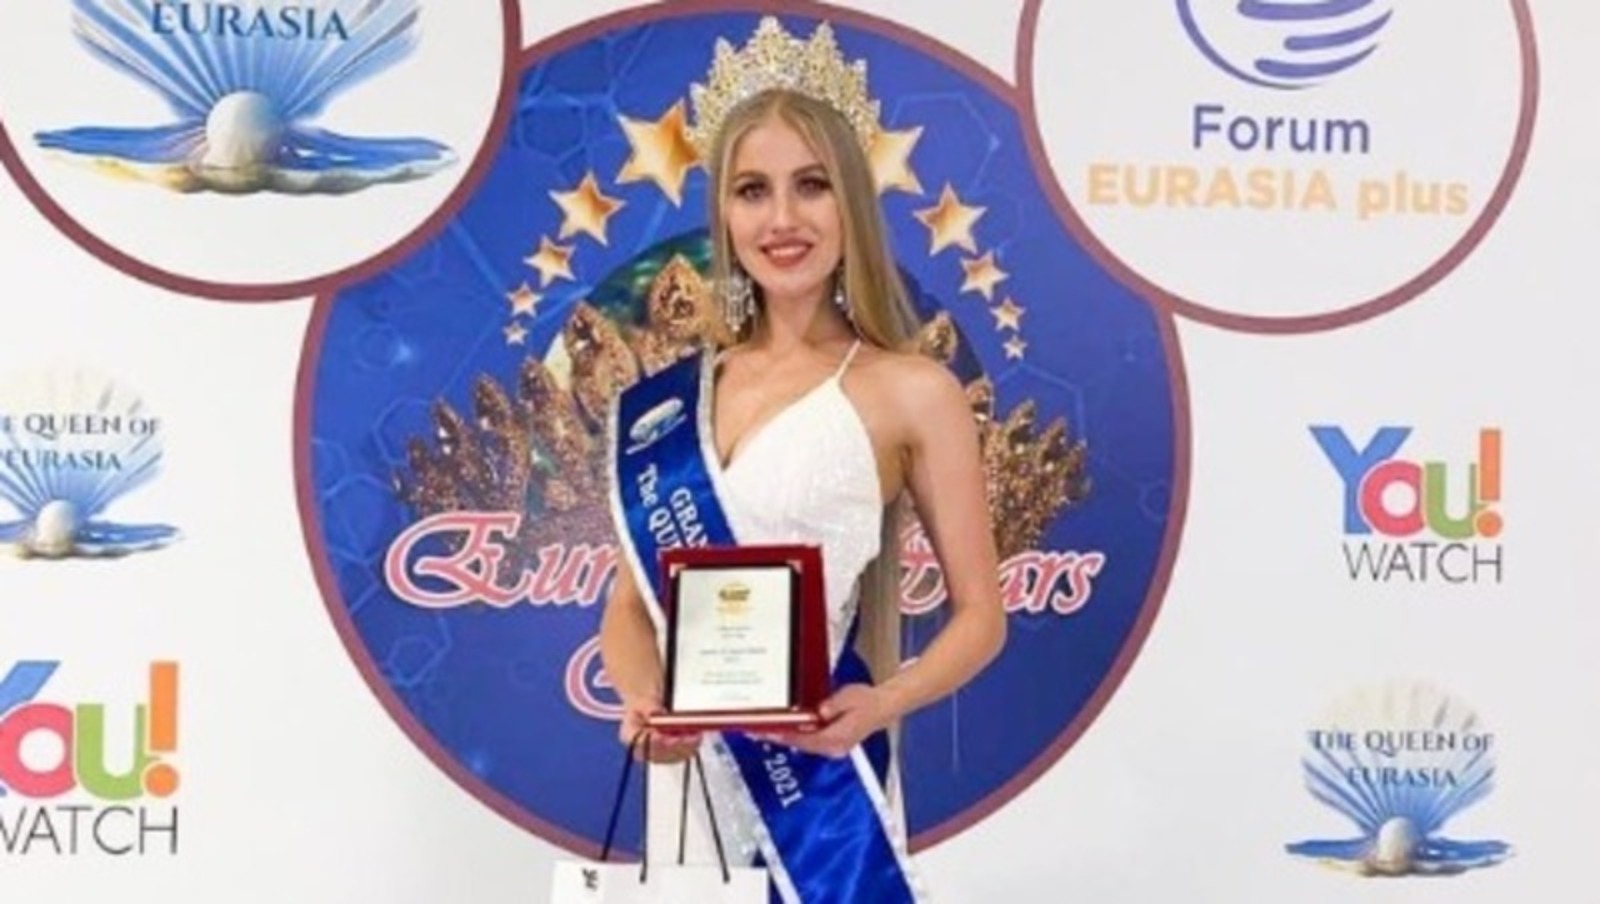 Альбина Шайхлисламова из Башкирии победила на Международном конкурсе красоты «Королева Евразии-2021»